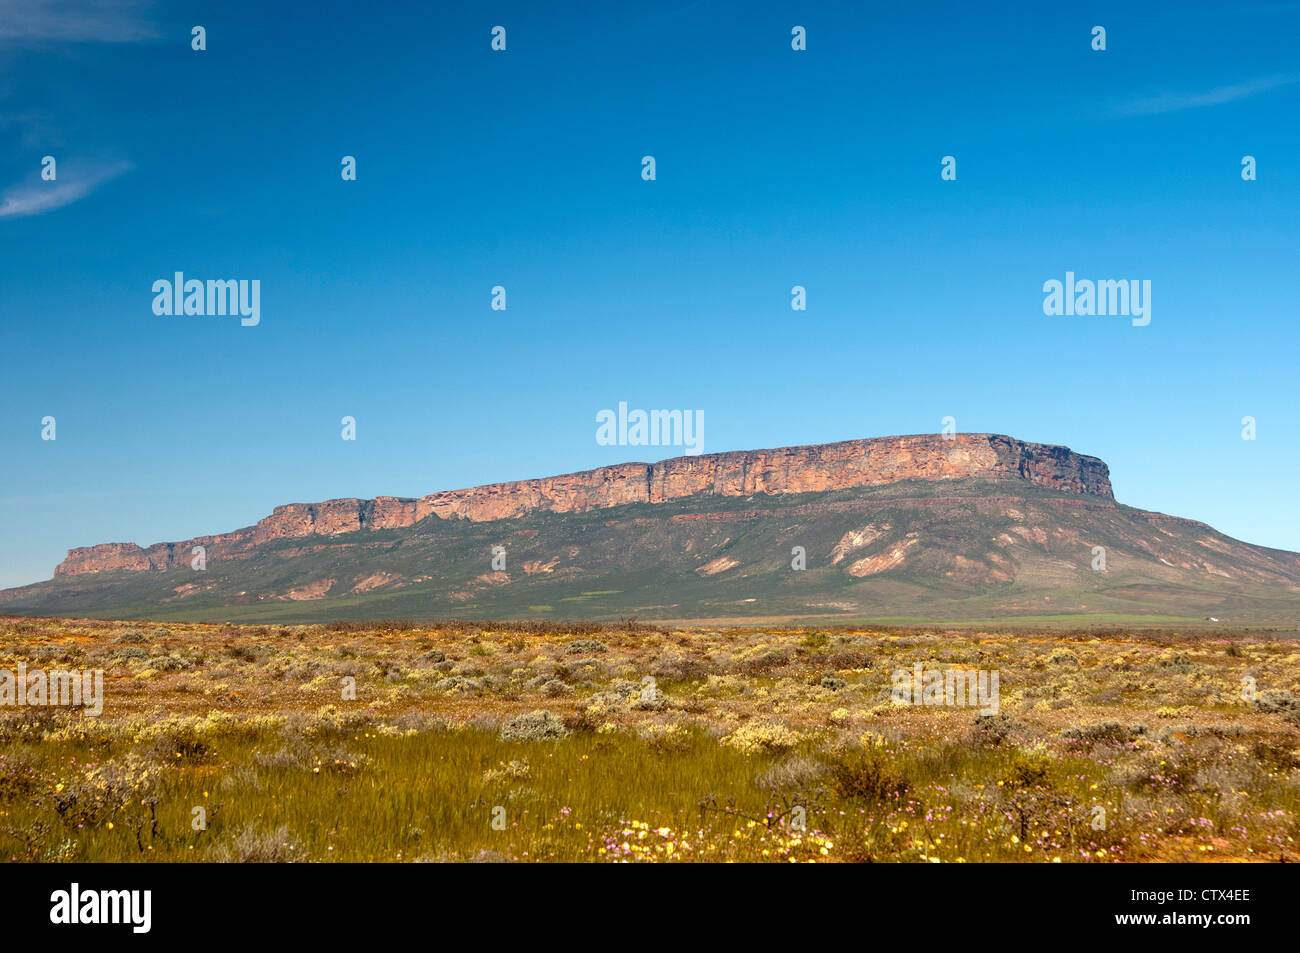 The Gifberg, Poison Mountain, in the vast Nama Karoo near Vanrhynsdorp, Western Cape Province, South Africa Stock Photo